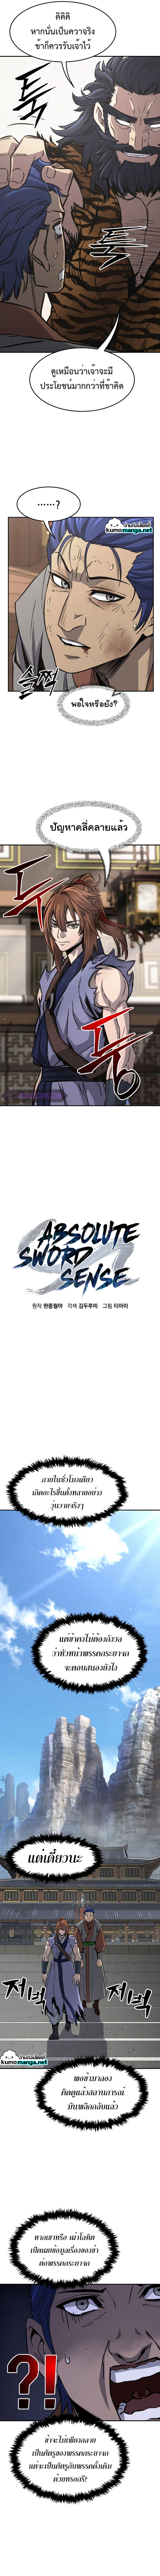 Absolute Sword Sense 35 (9)